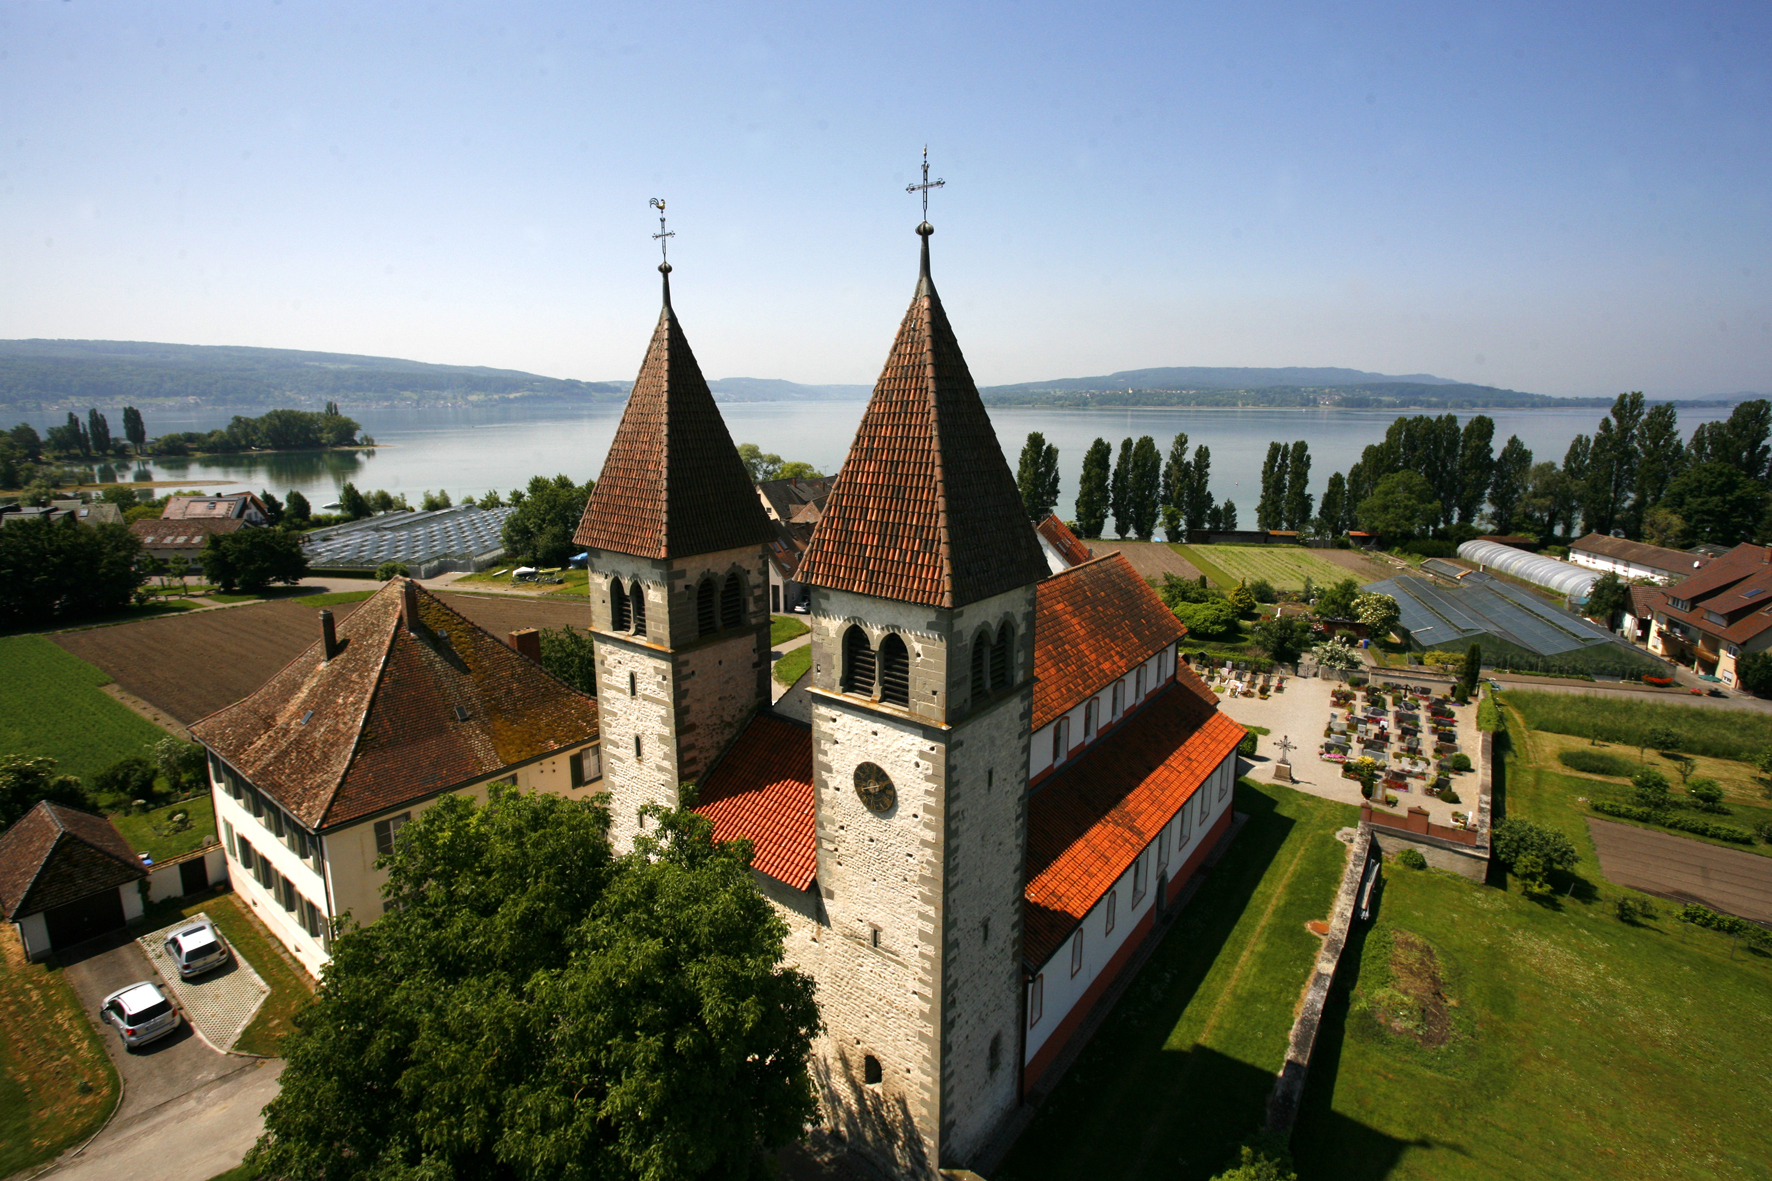 Explore Lake Constance, enjoy cycling holidays